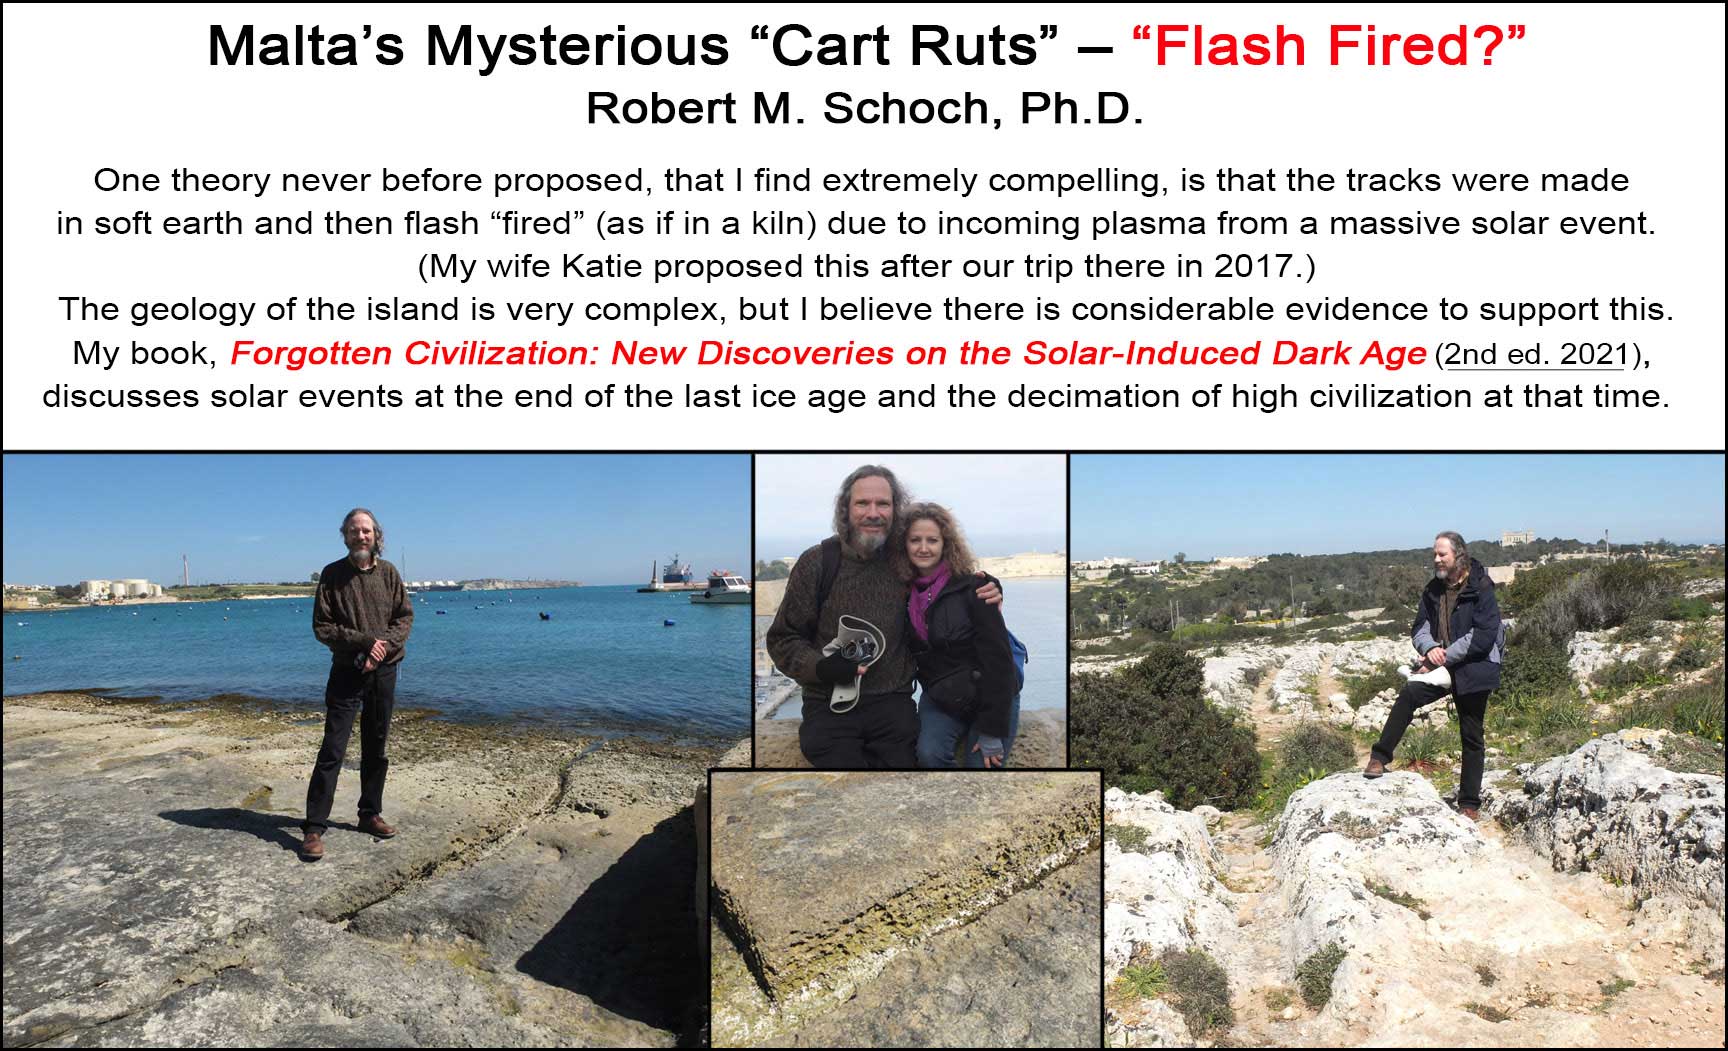 A meme regarding the cart ruts on Malta potentially being flash fired via plasma.